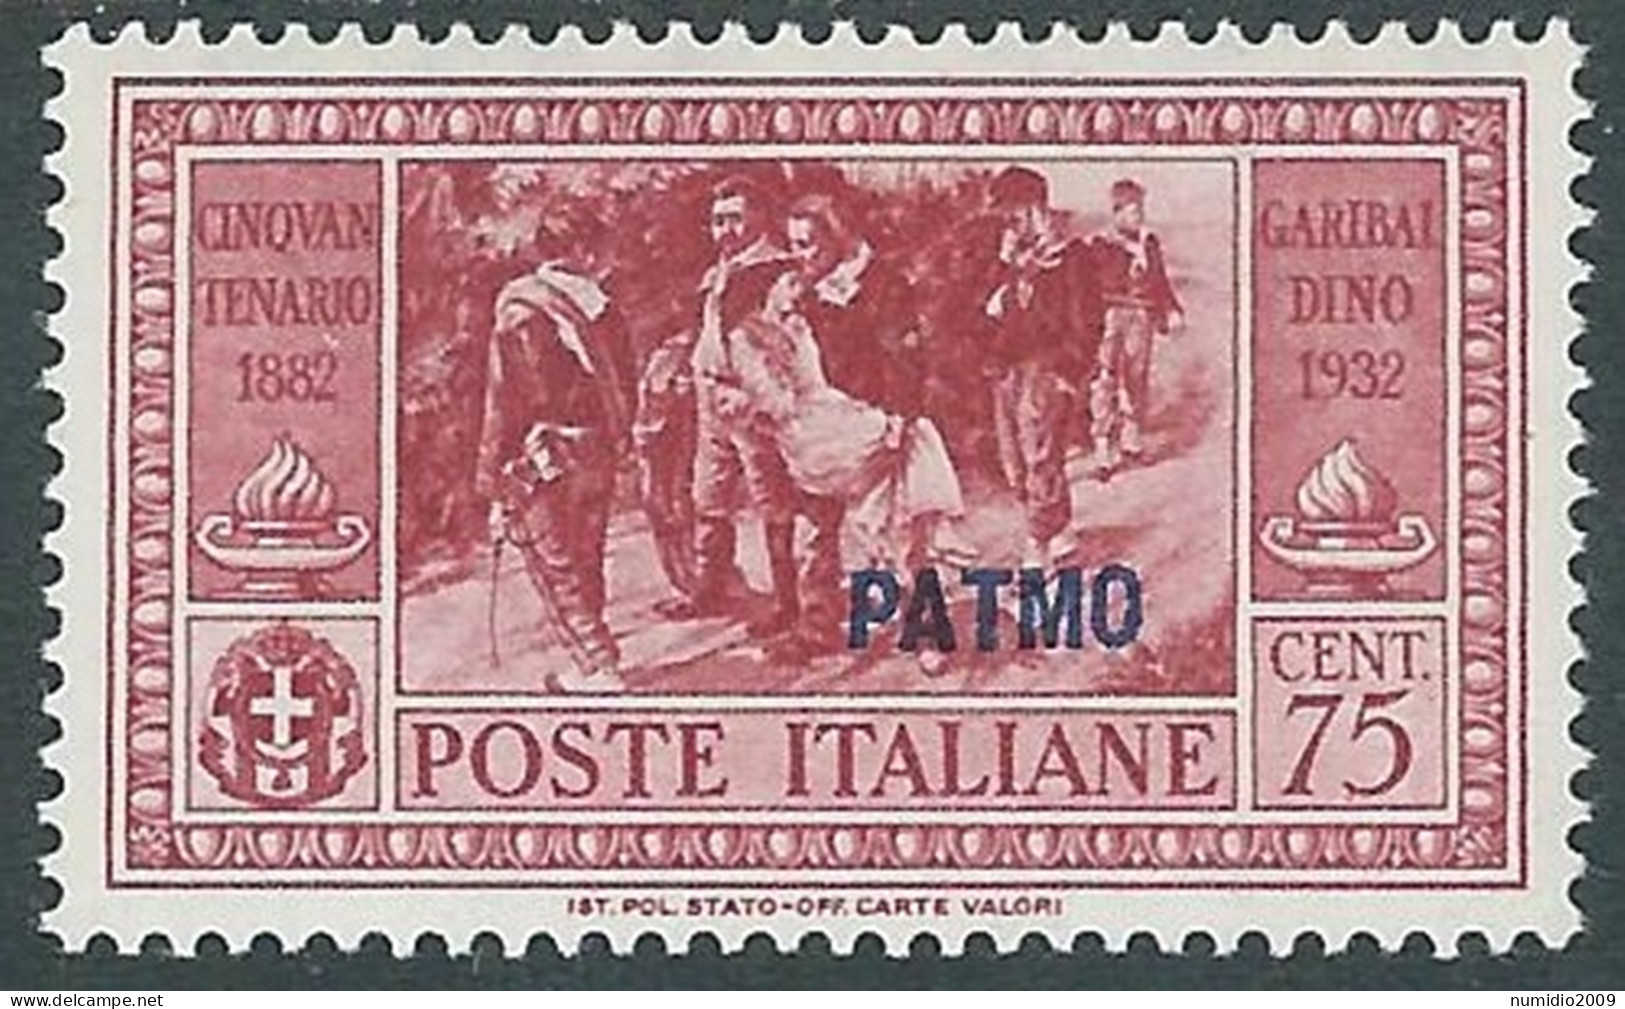 1932 EGEO PATMO GARIBALDI 75 CENT MH * - I45-8 - Egeo (Patmo)